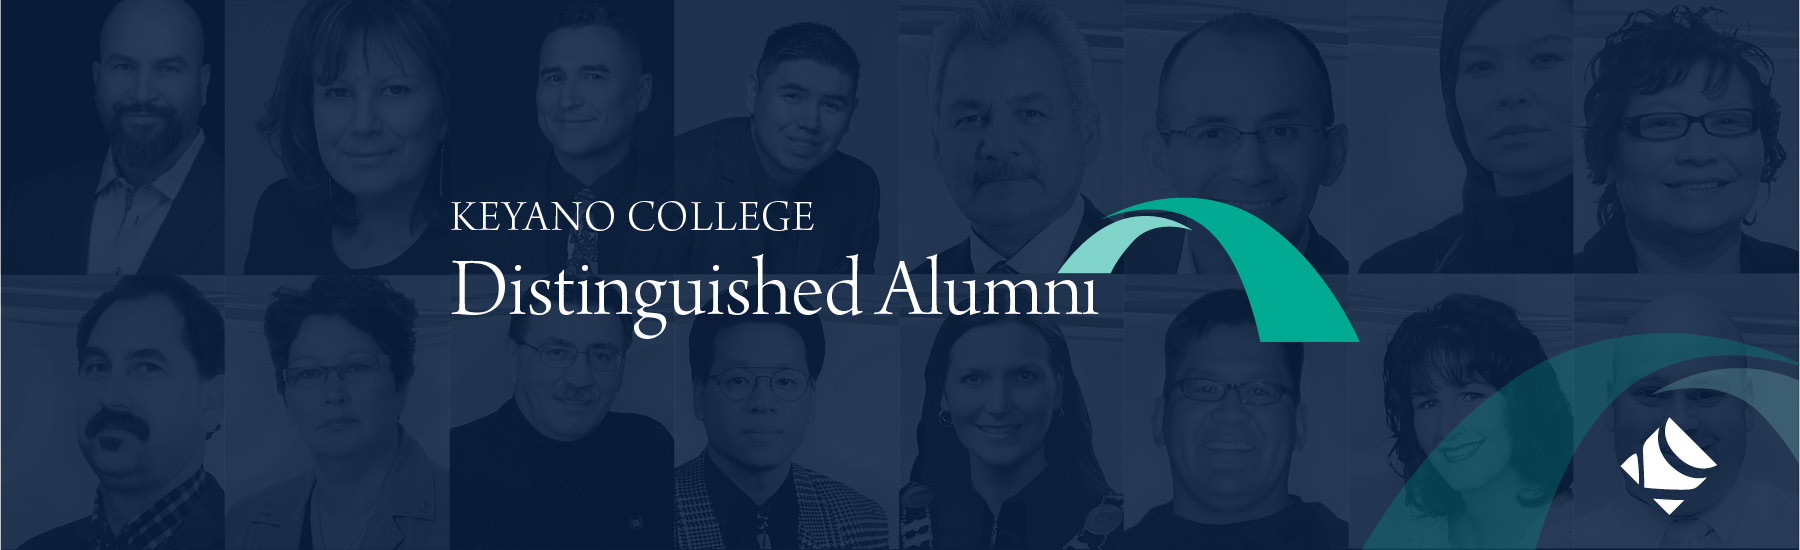 Distinguished Alumni - Banner